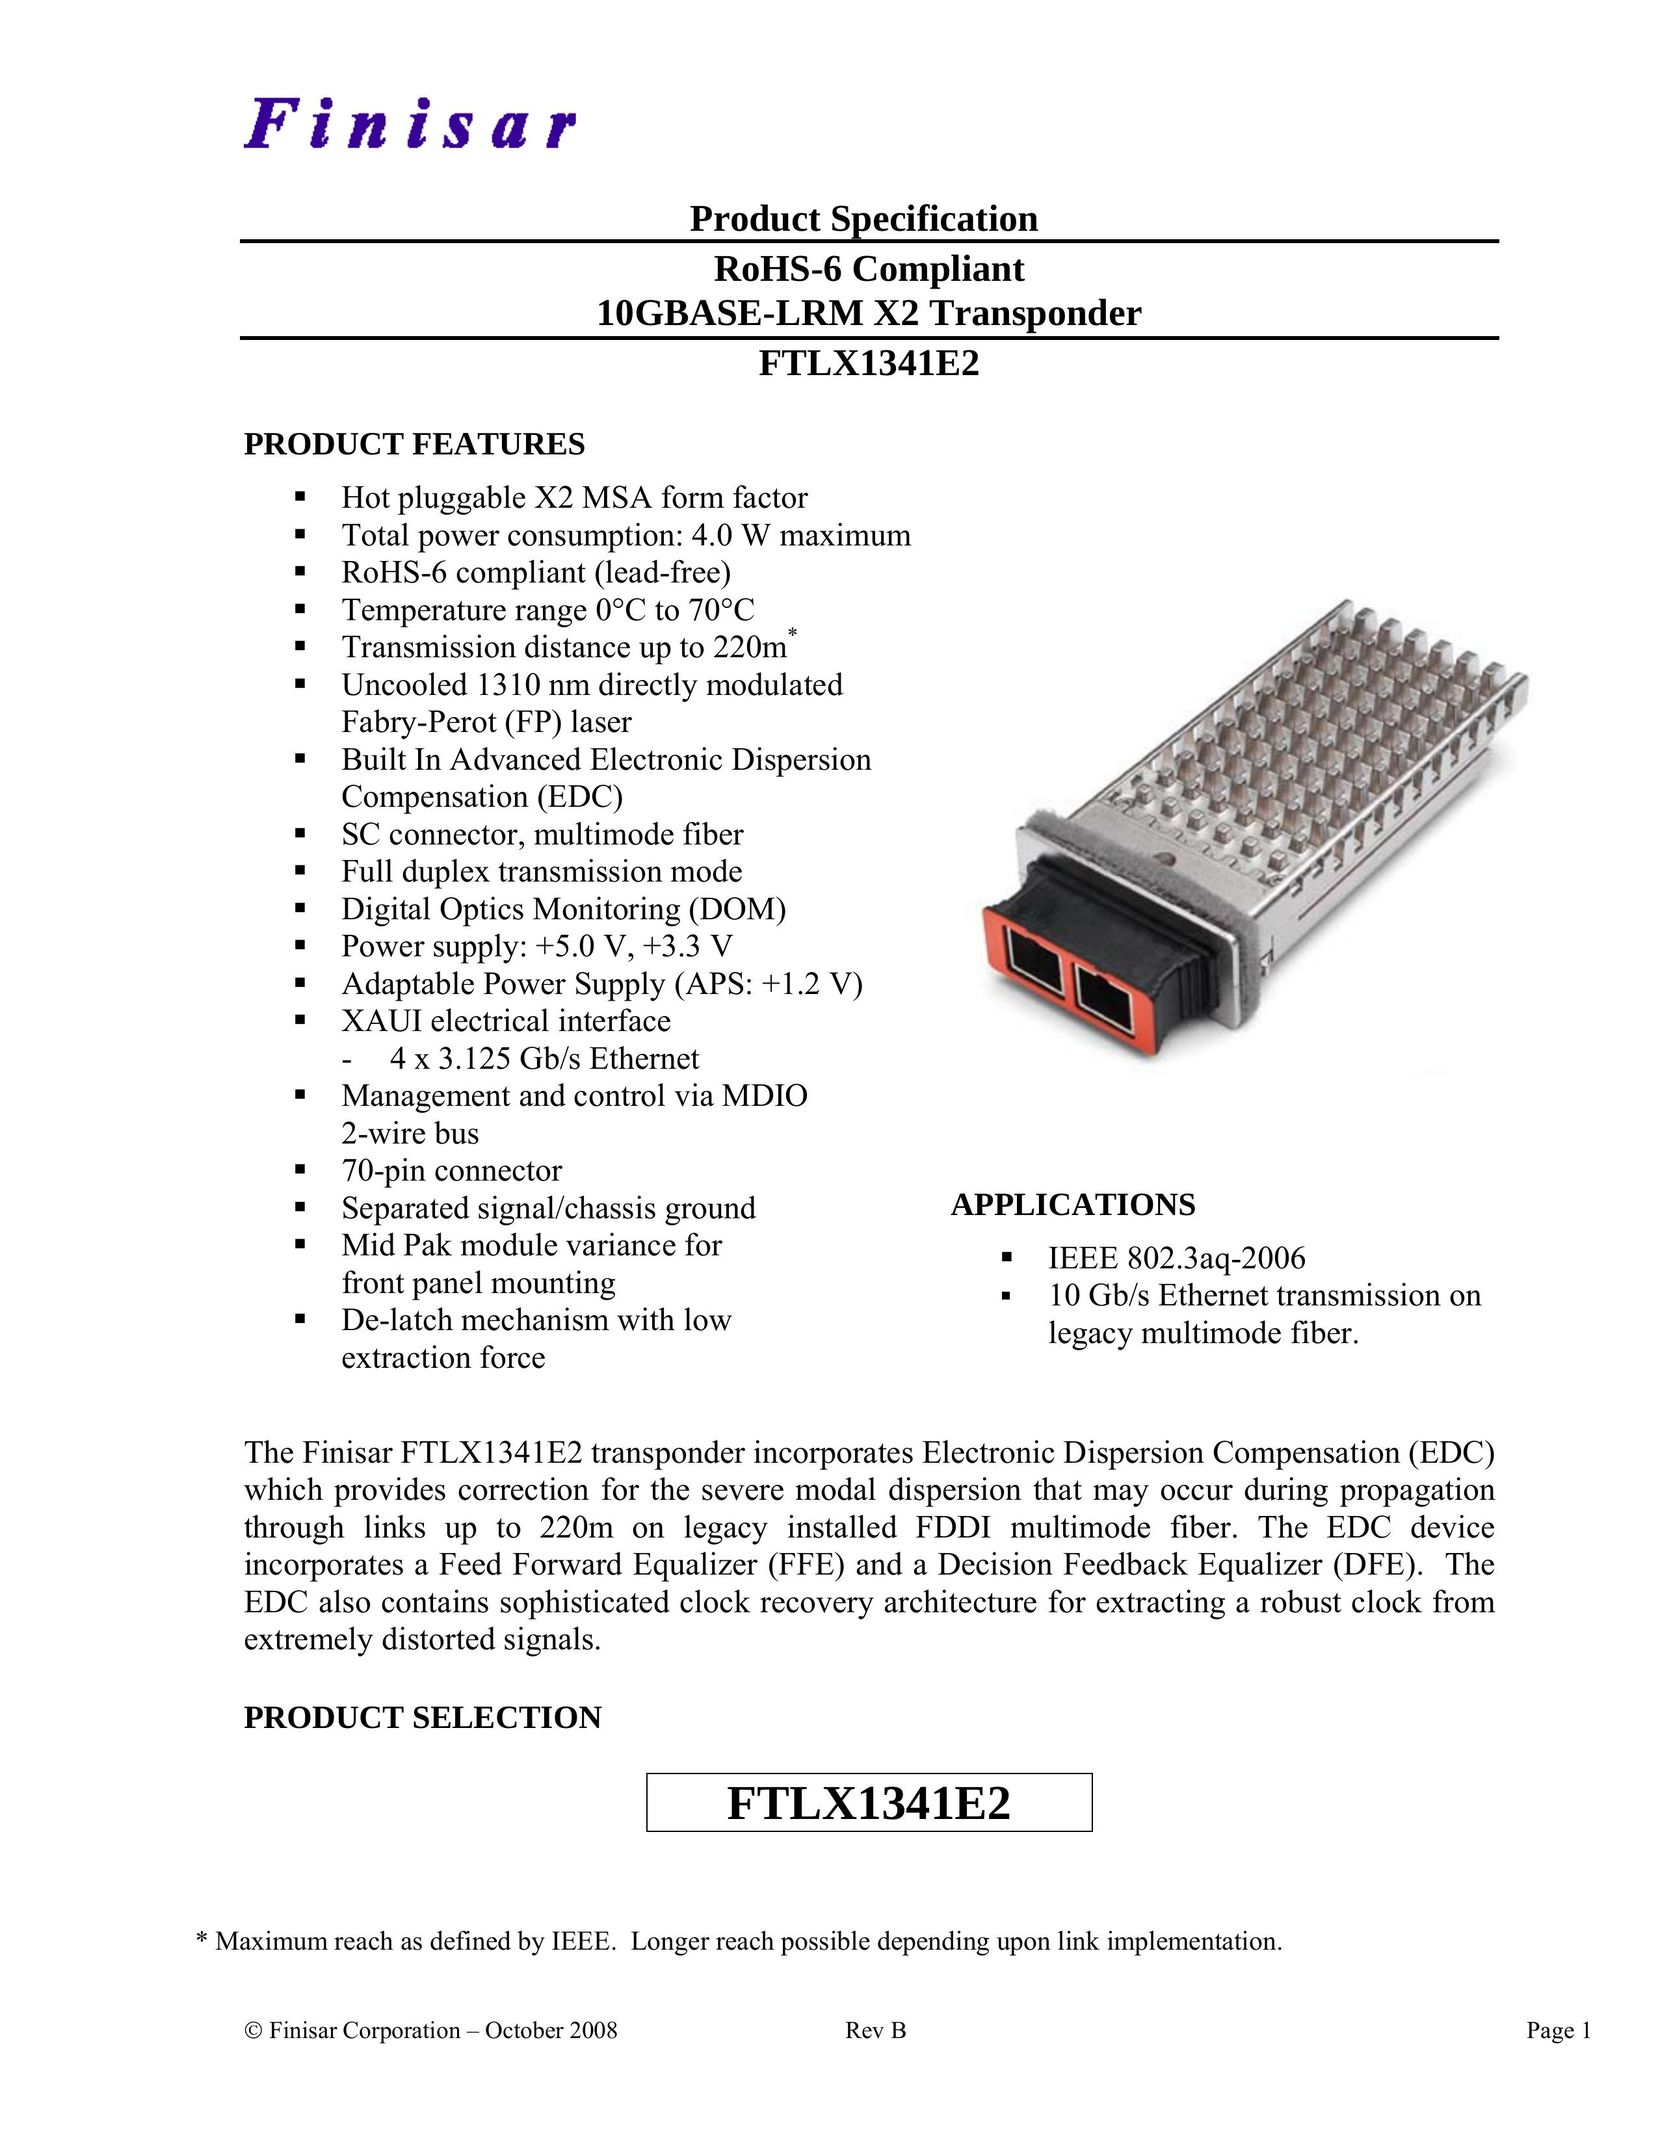 Finisar FTLX1341E2 Network Card User Manual